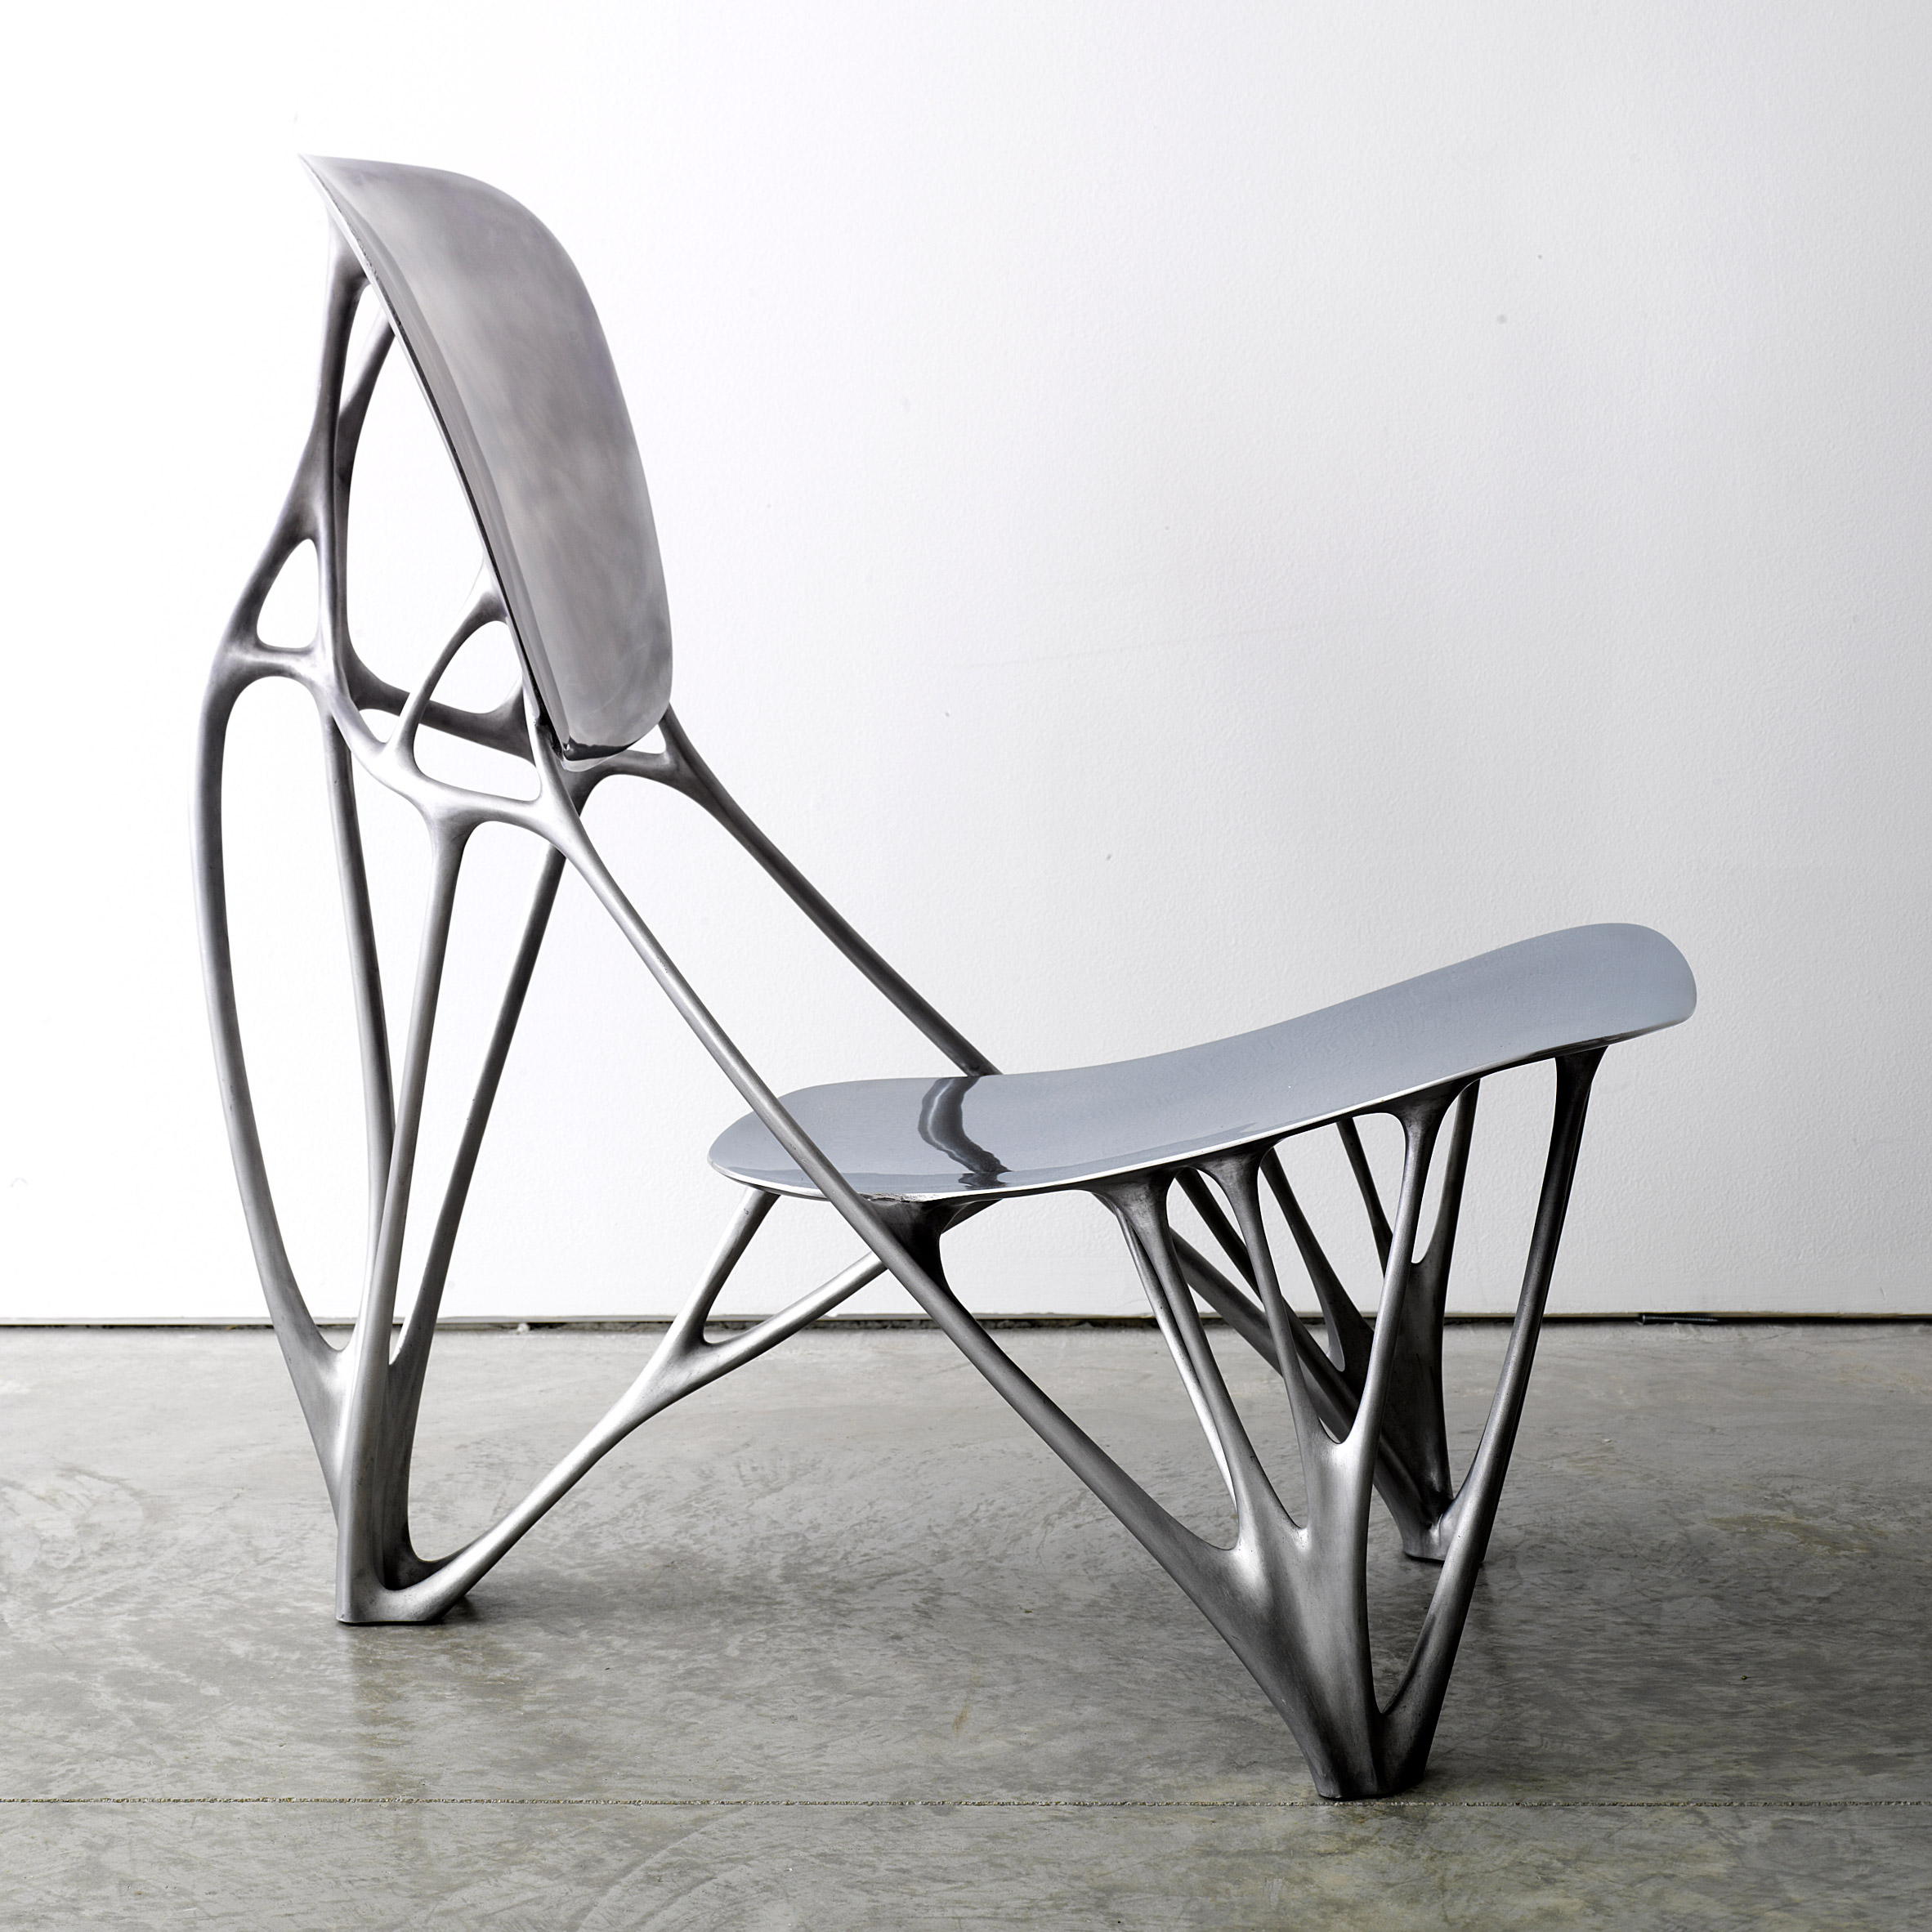 Bone Chair by Joris Laarman